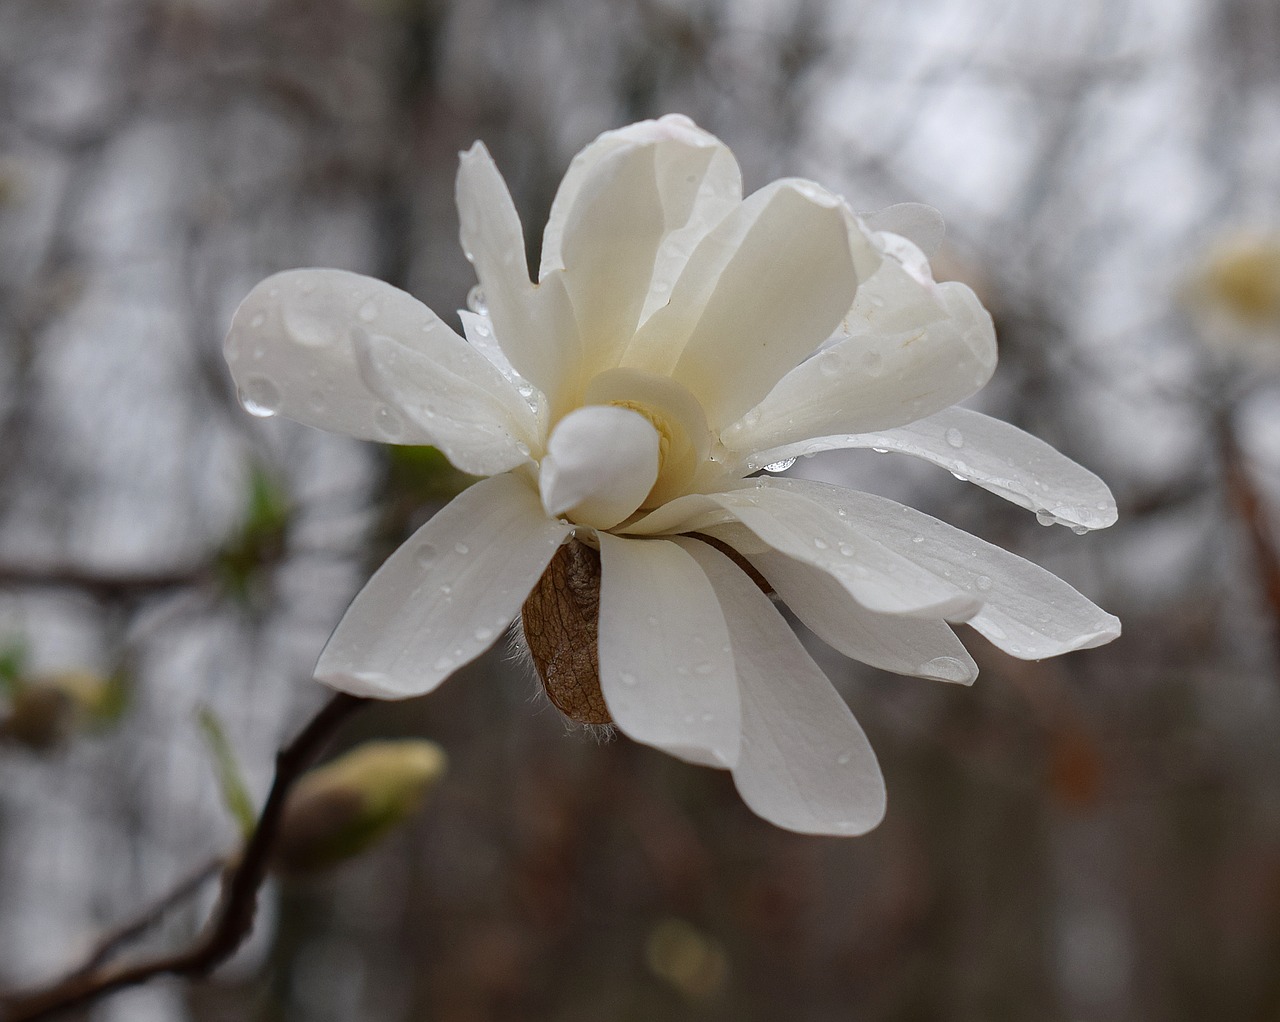 star magnolia fin the rain rain raindrops free photo